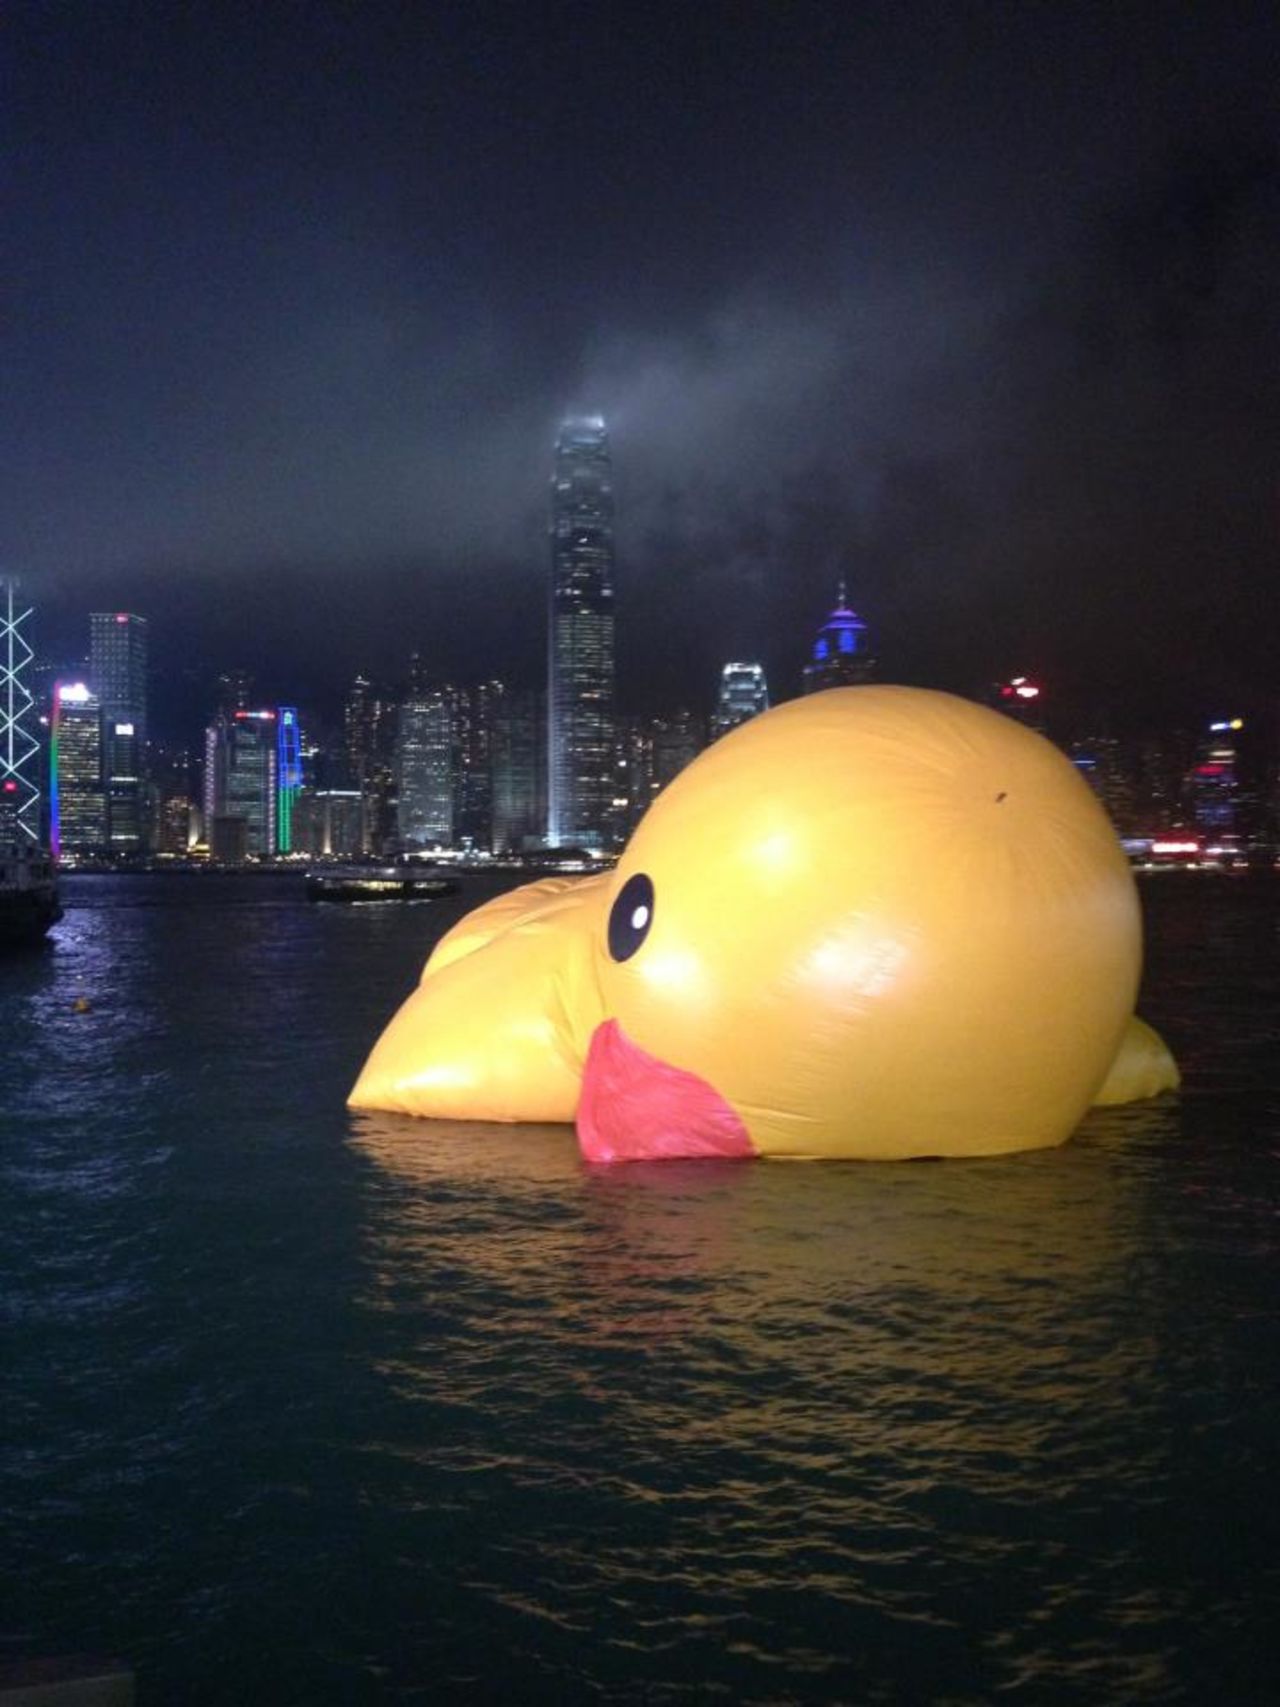 Bad night: Rubber duck recreates a scene more familiar in Hong Kong's Lan Kwai Fong or Wan Chai bar areas.